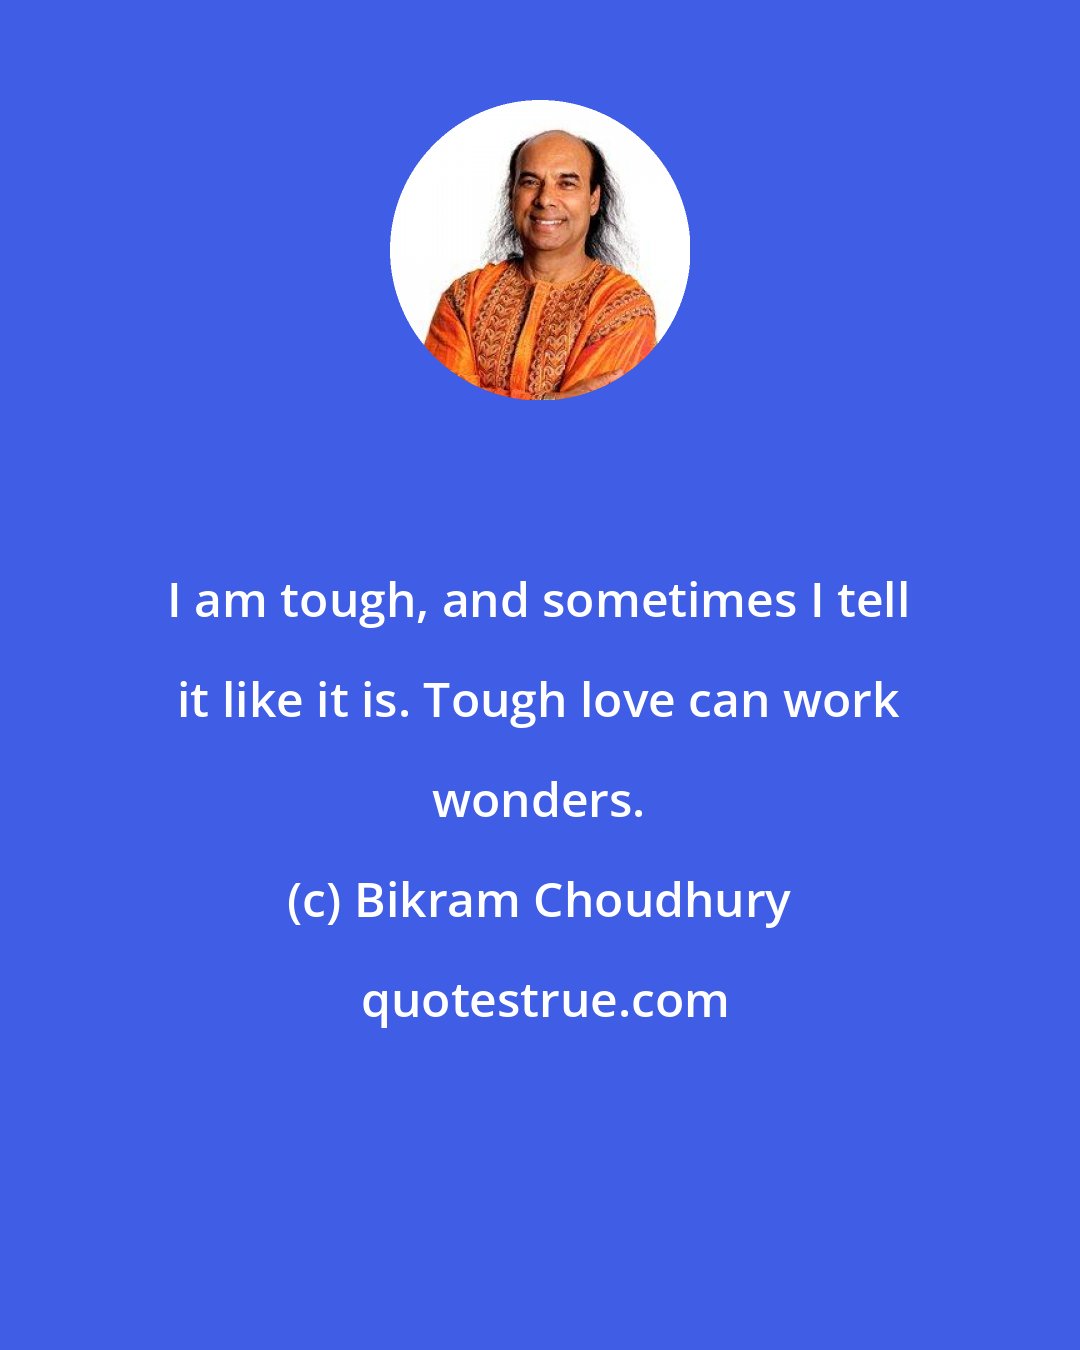 Bikram Choudhury: I am tough, and sometimes I tell it like it is. Tough love can work wonders.